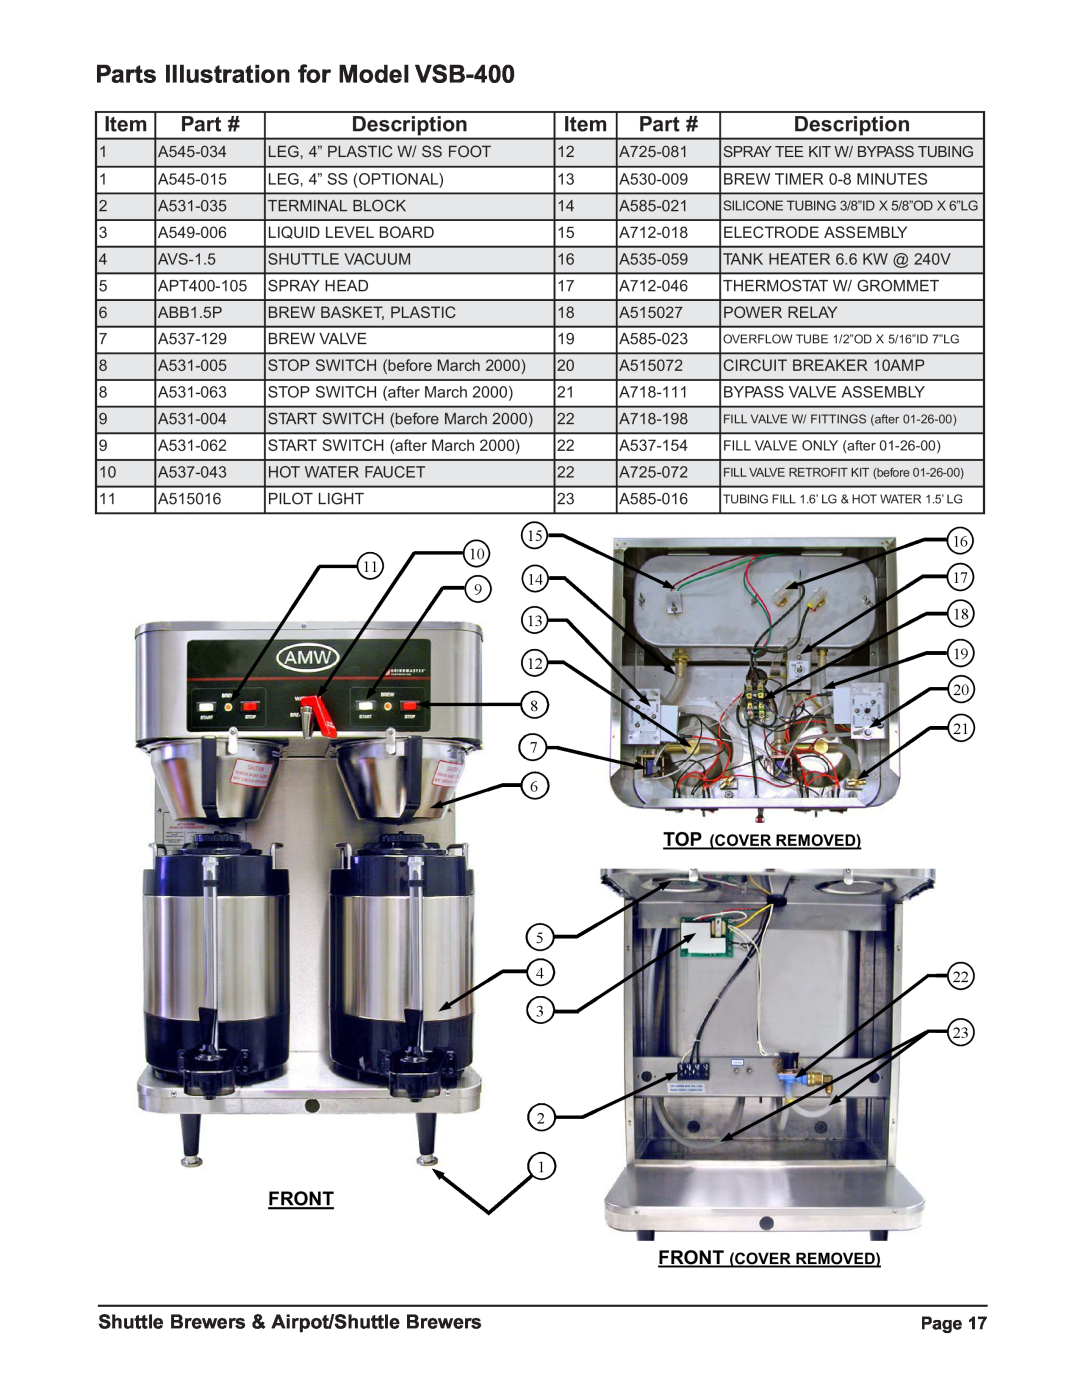 Grindmaster P300E Parts Illustration for Model VSB-400, Description, Shuttle Brewers & Airpot/Shuttle Brewers, Front, Page 